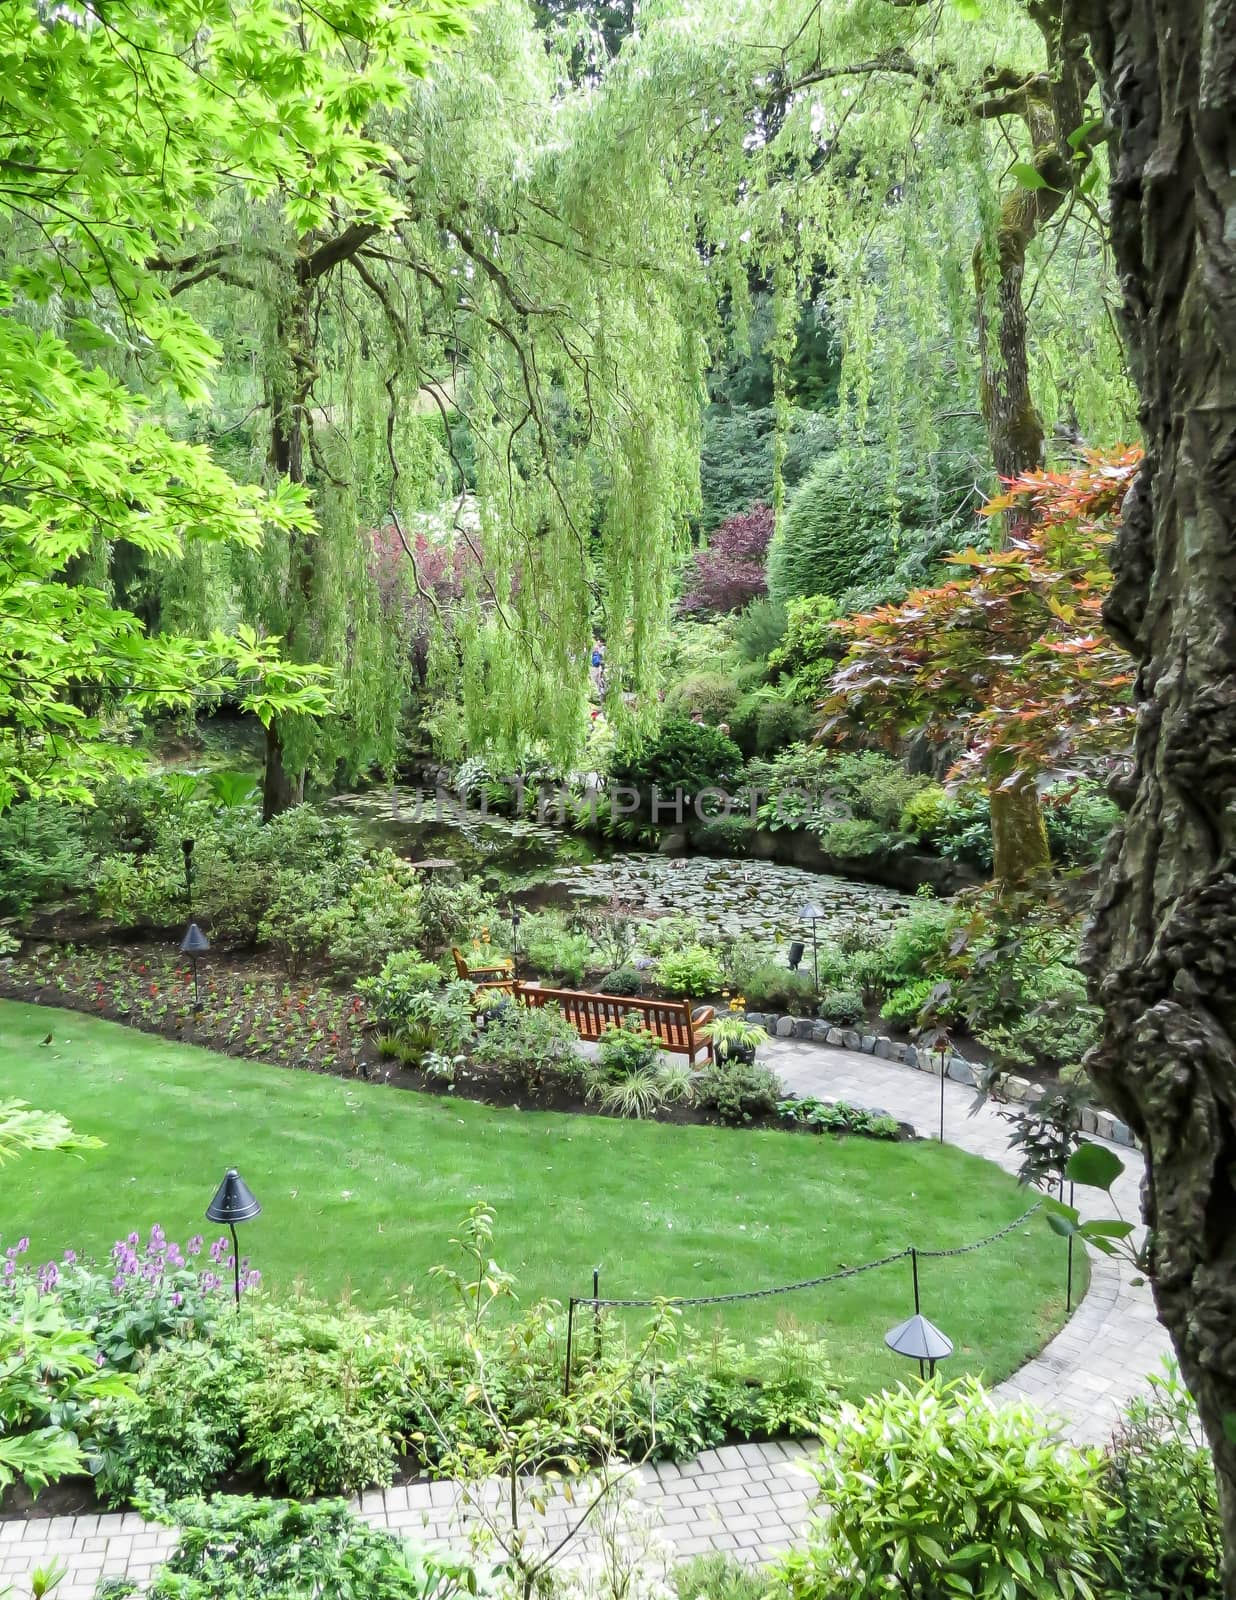 Lovely Gardens in Canada by teacherdad48@yahoo.com